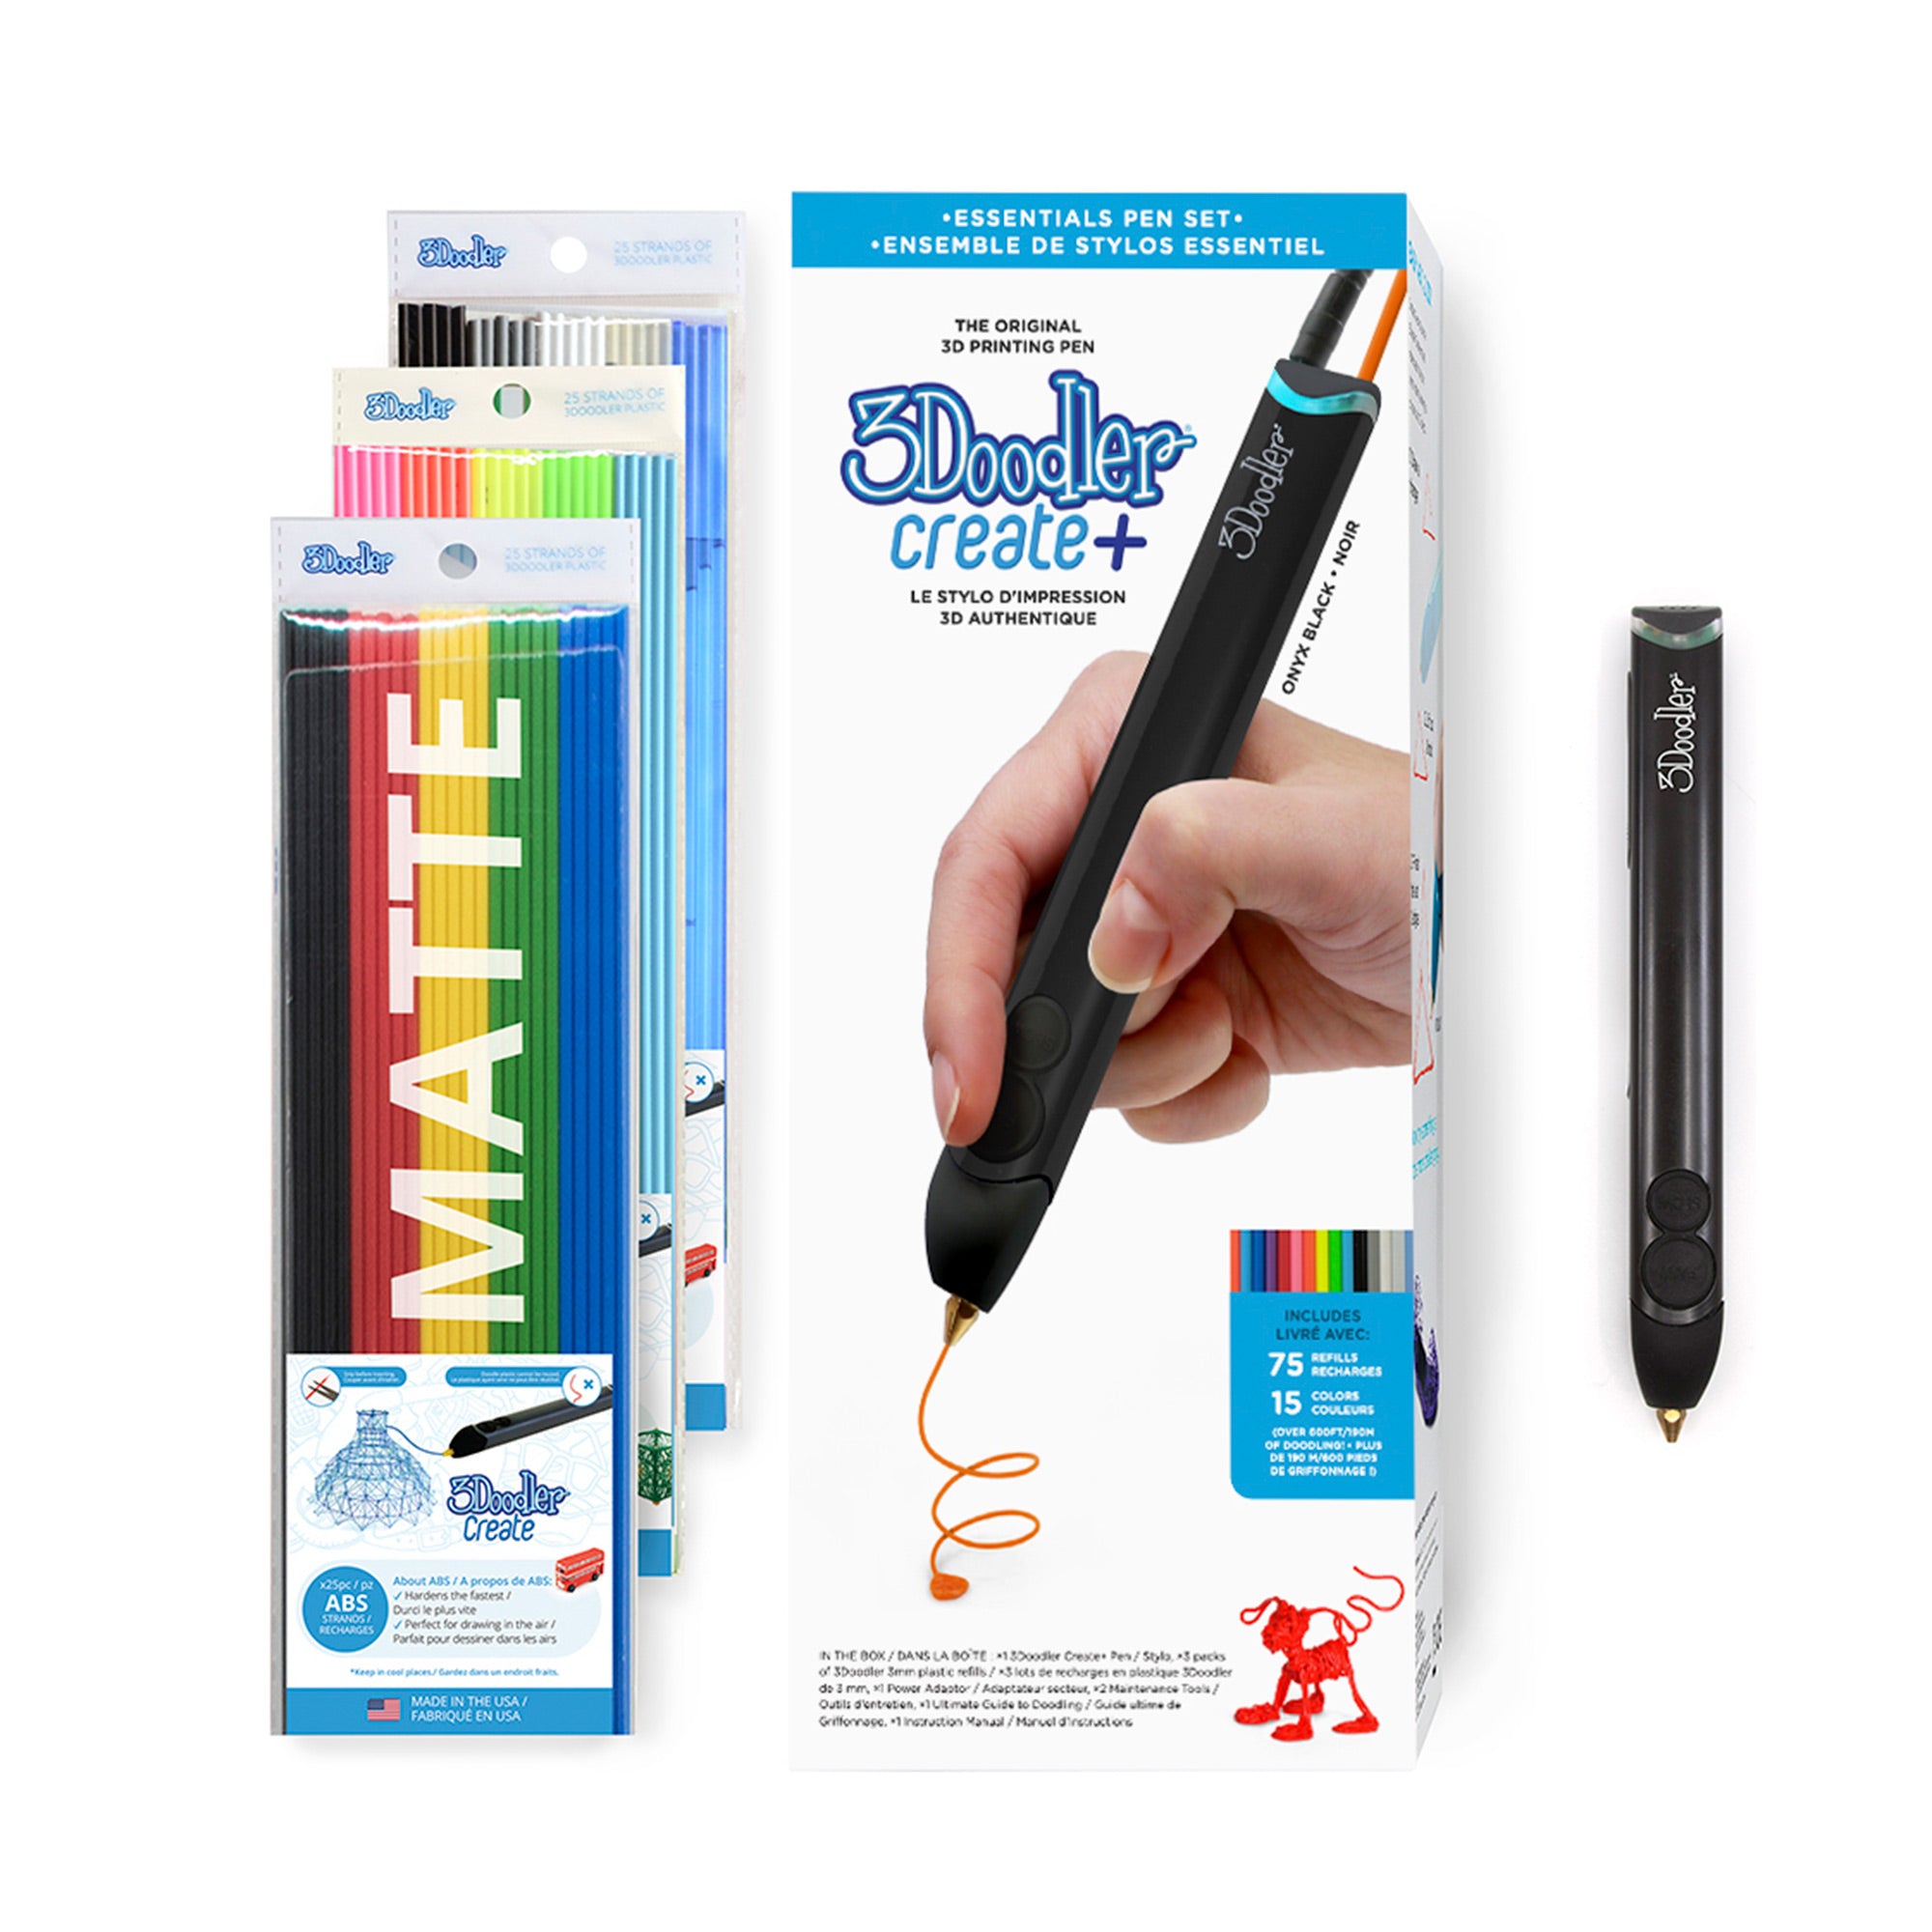 Starter pack stylo 3D – Coffret dessin enfant – Recharges stylo 3D